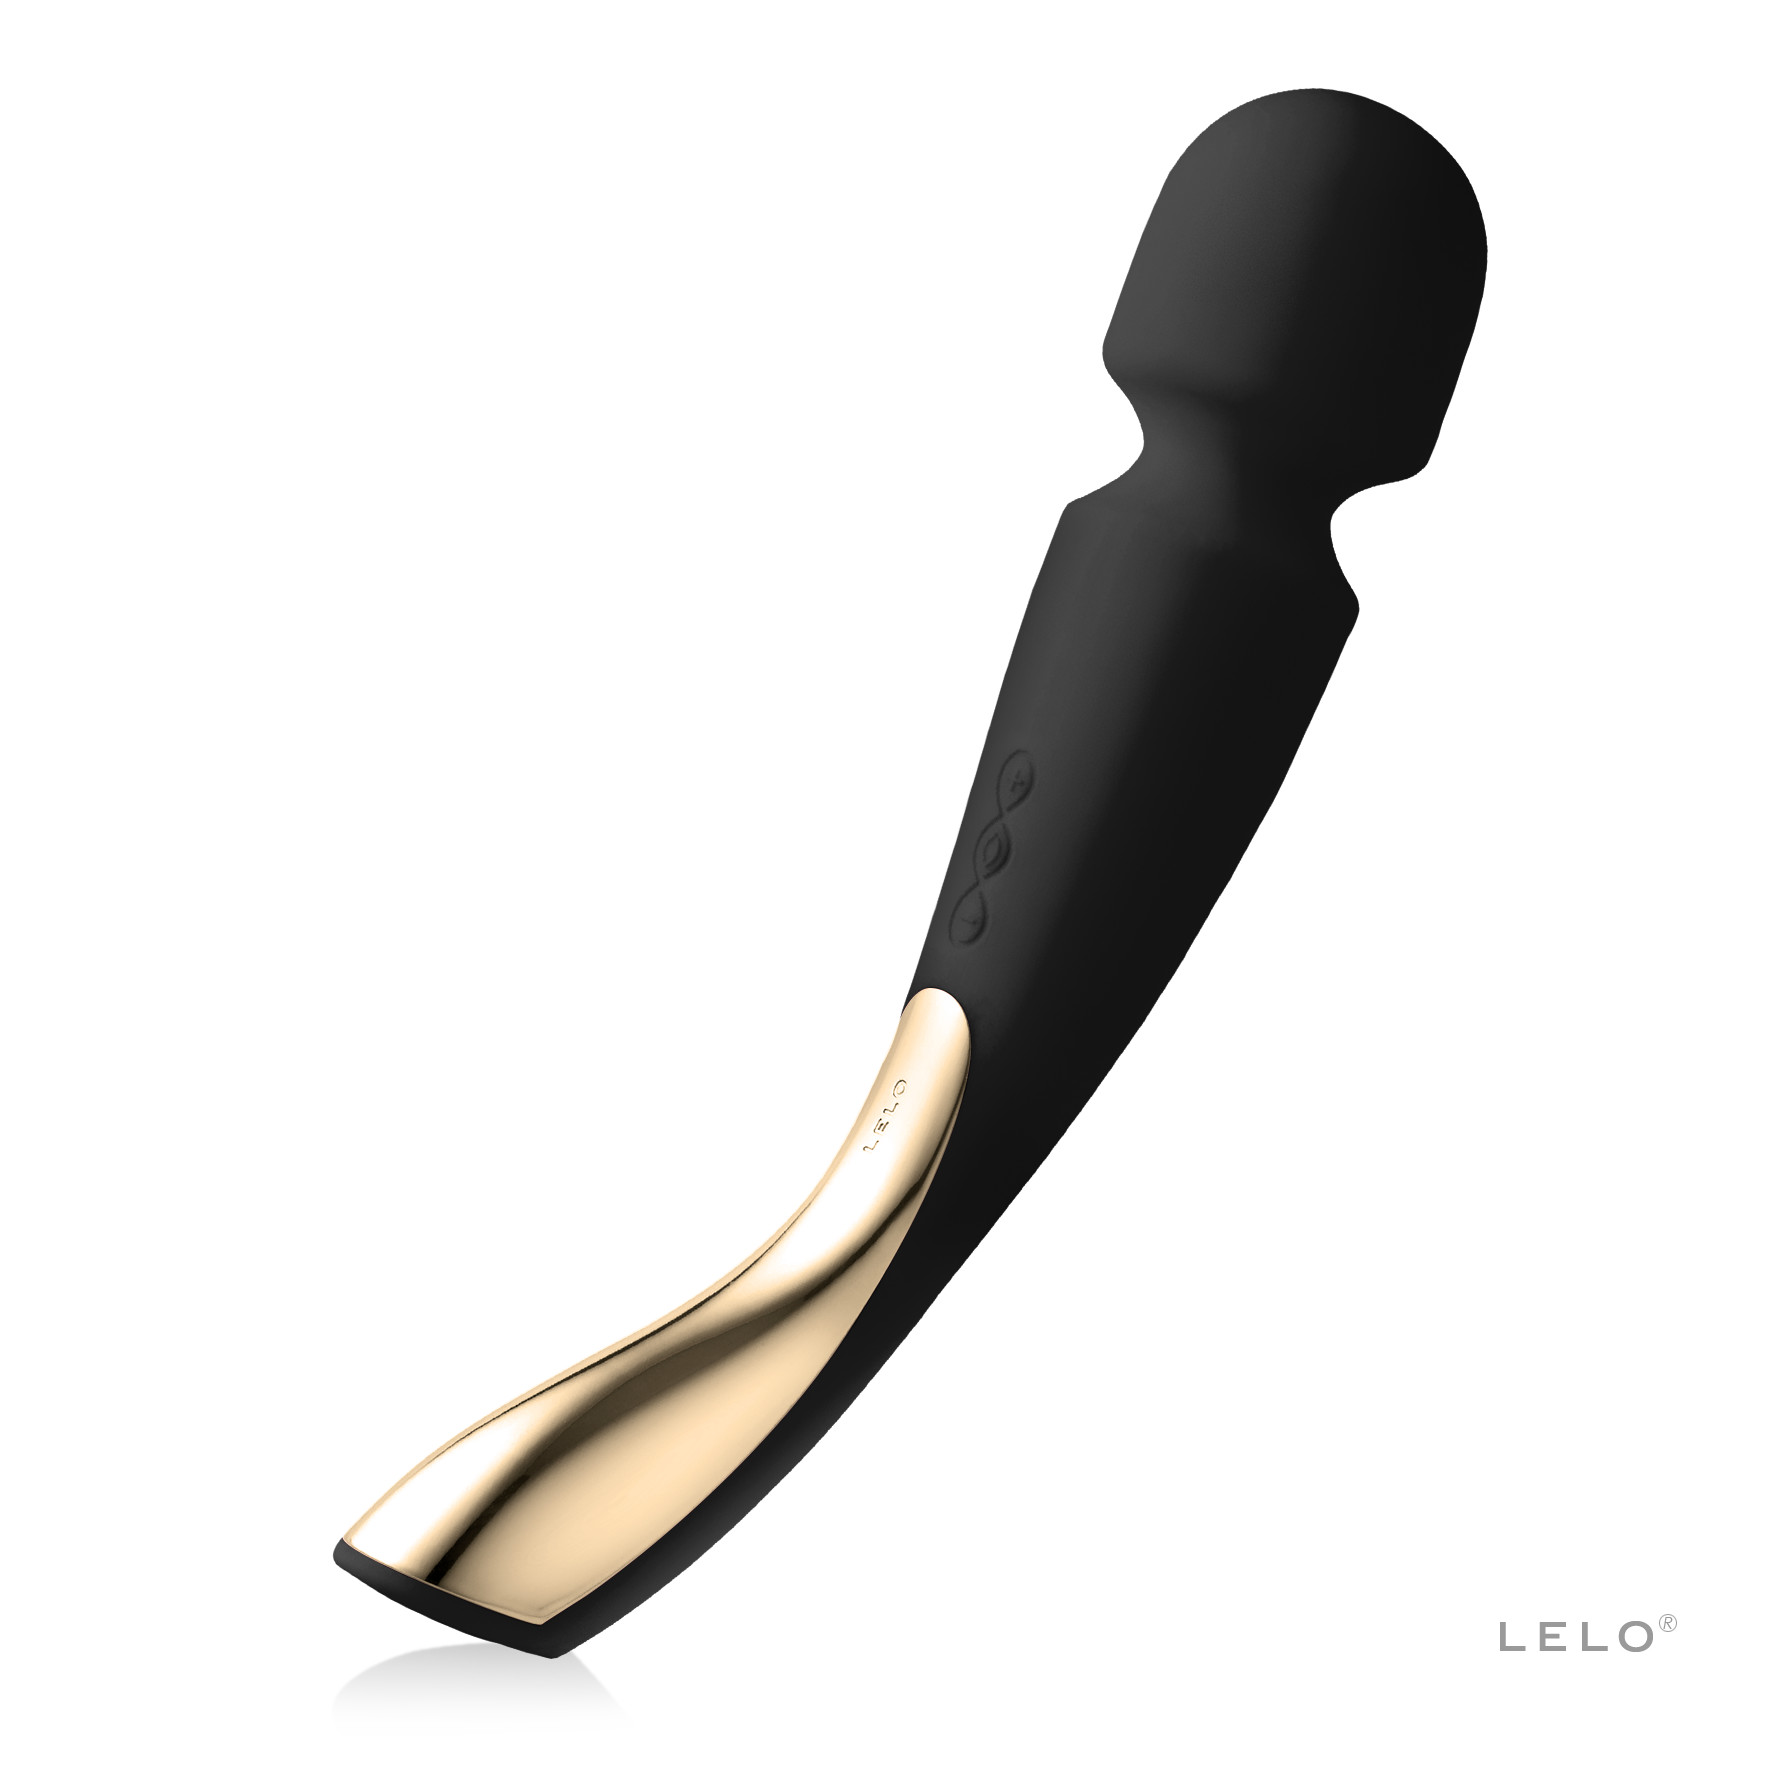 LELO SMART Wand 2 Large, Black, Luxurious Full-Body Waterproof Massager With 10 Vibration Settings - image 1 of 4